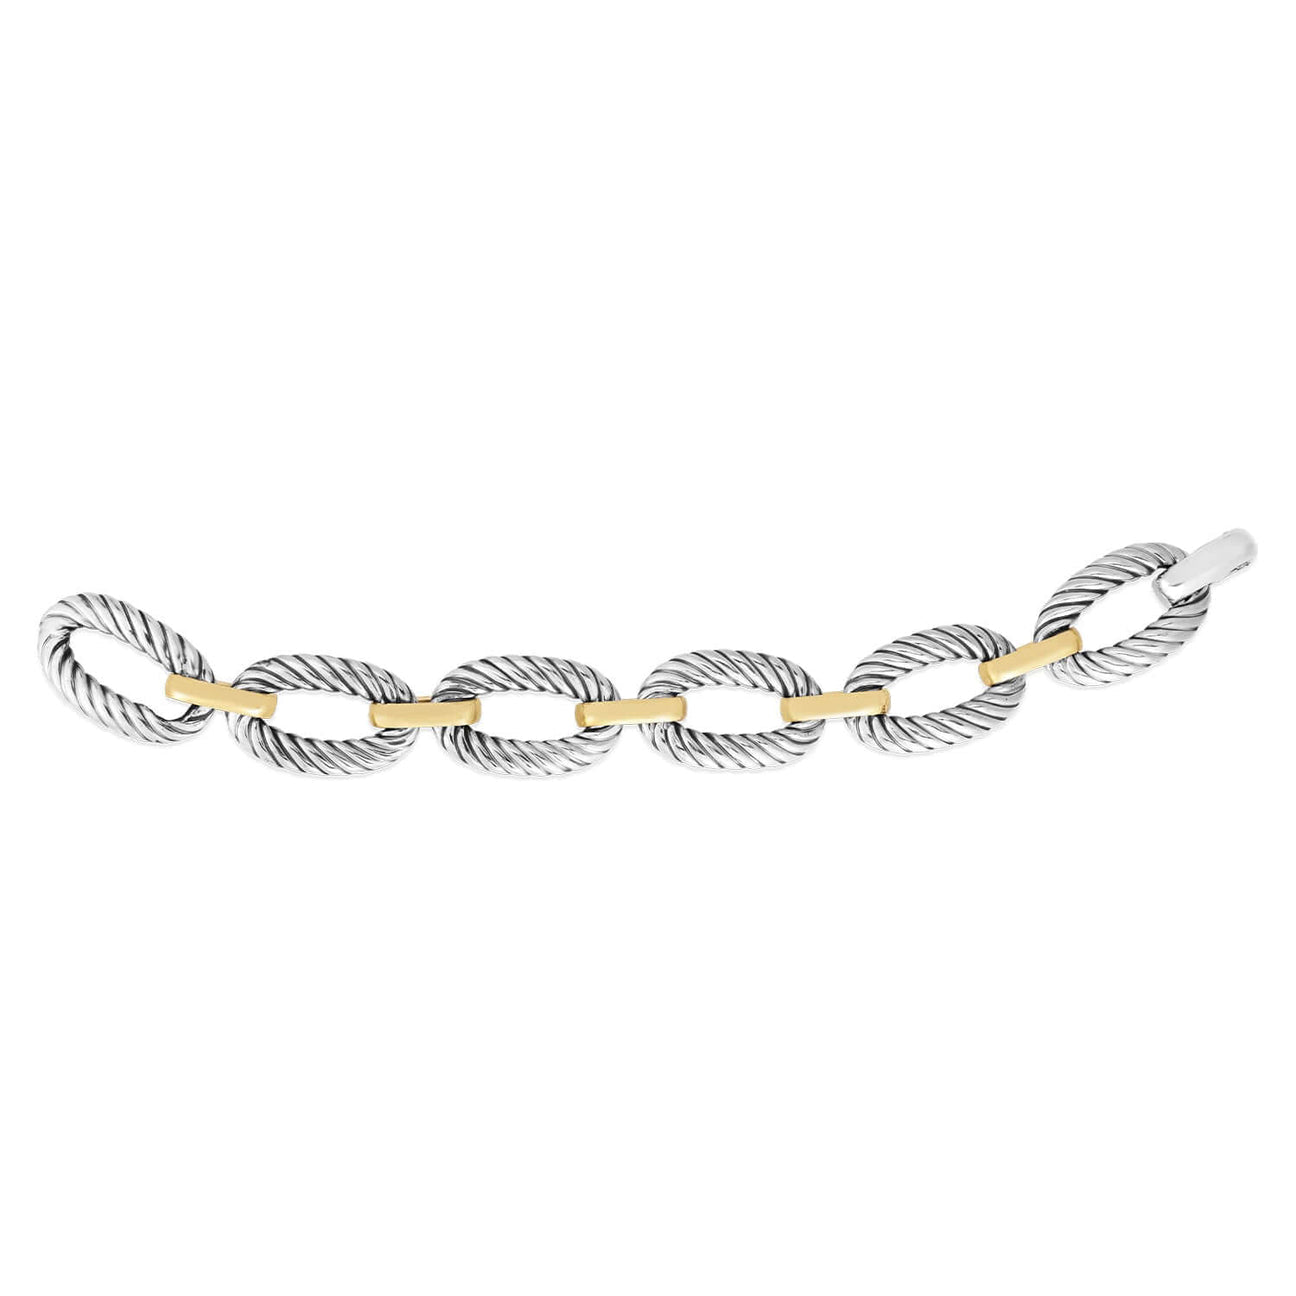 Silver & 18K Gold Thick Oval Cable Link Bracelet by Phillip Gavriel